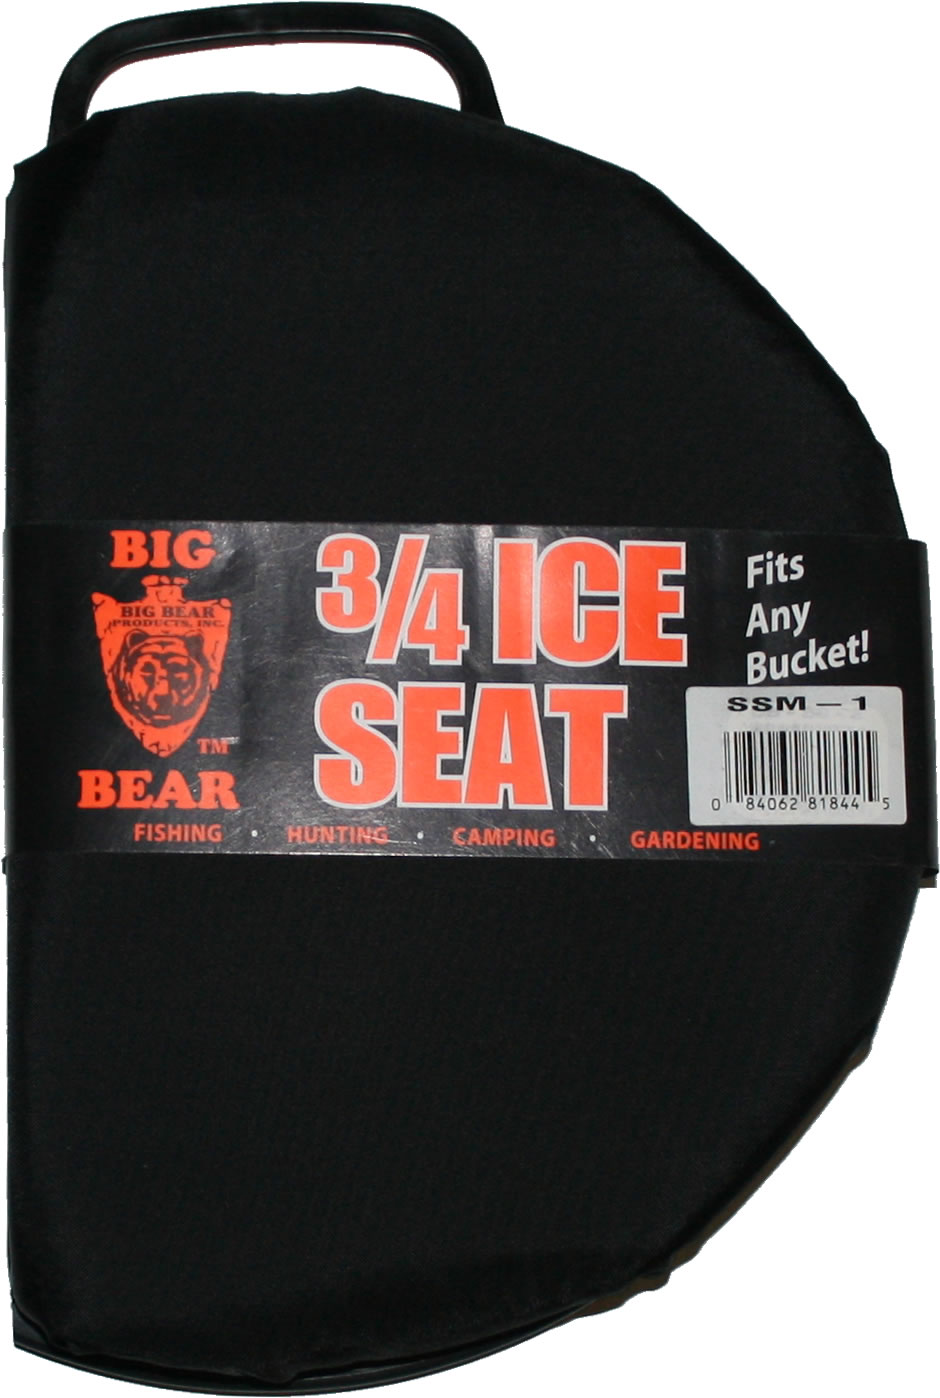 K&E Tackle Big Bear 3/4 Ice Seat